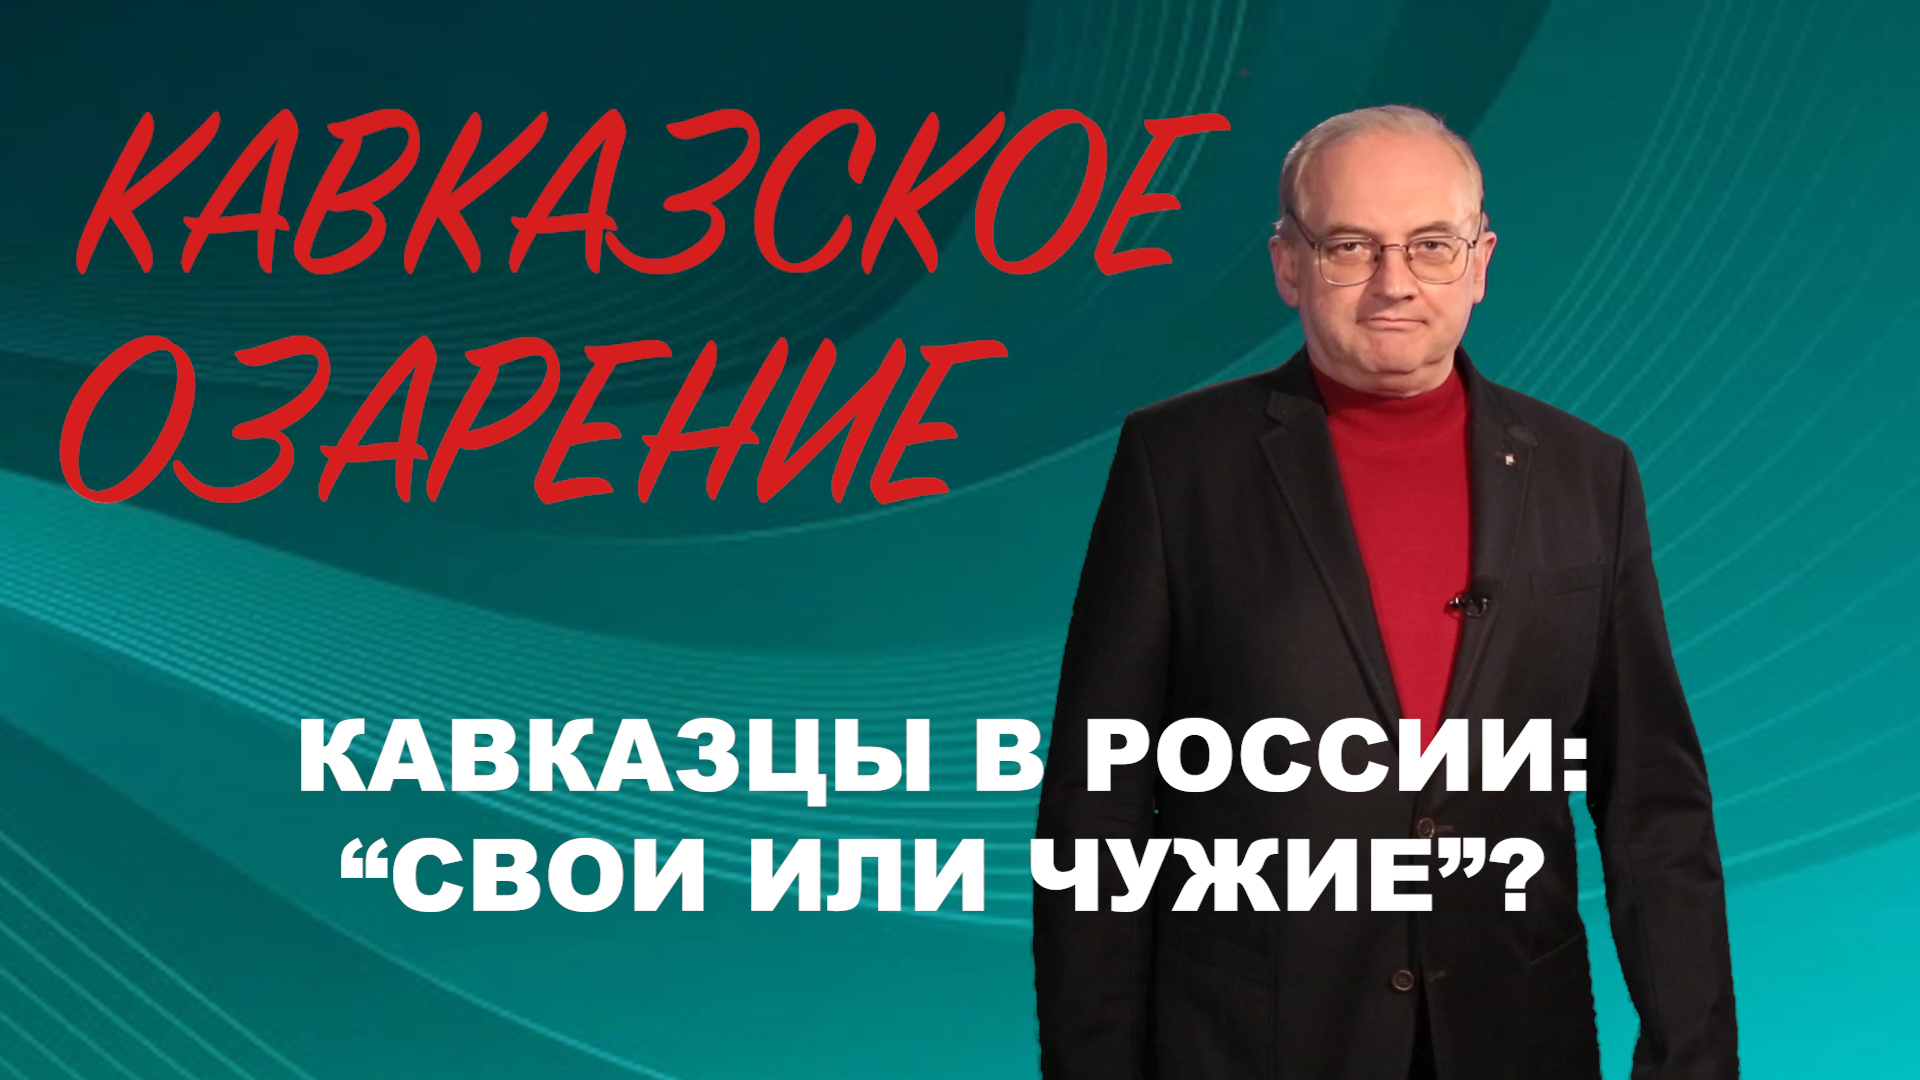 : vestikavkaza.ru